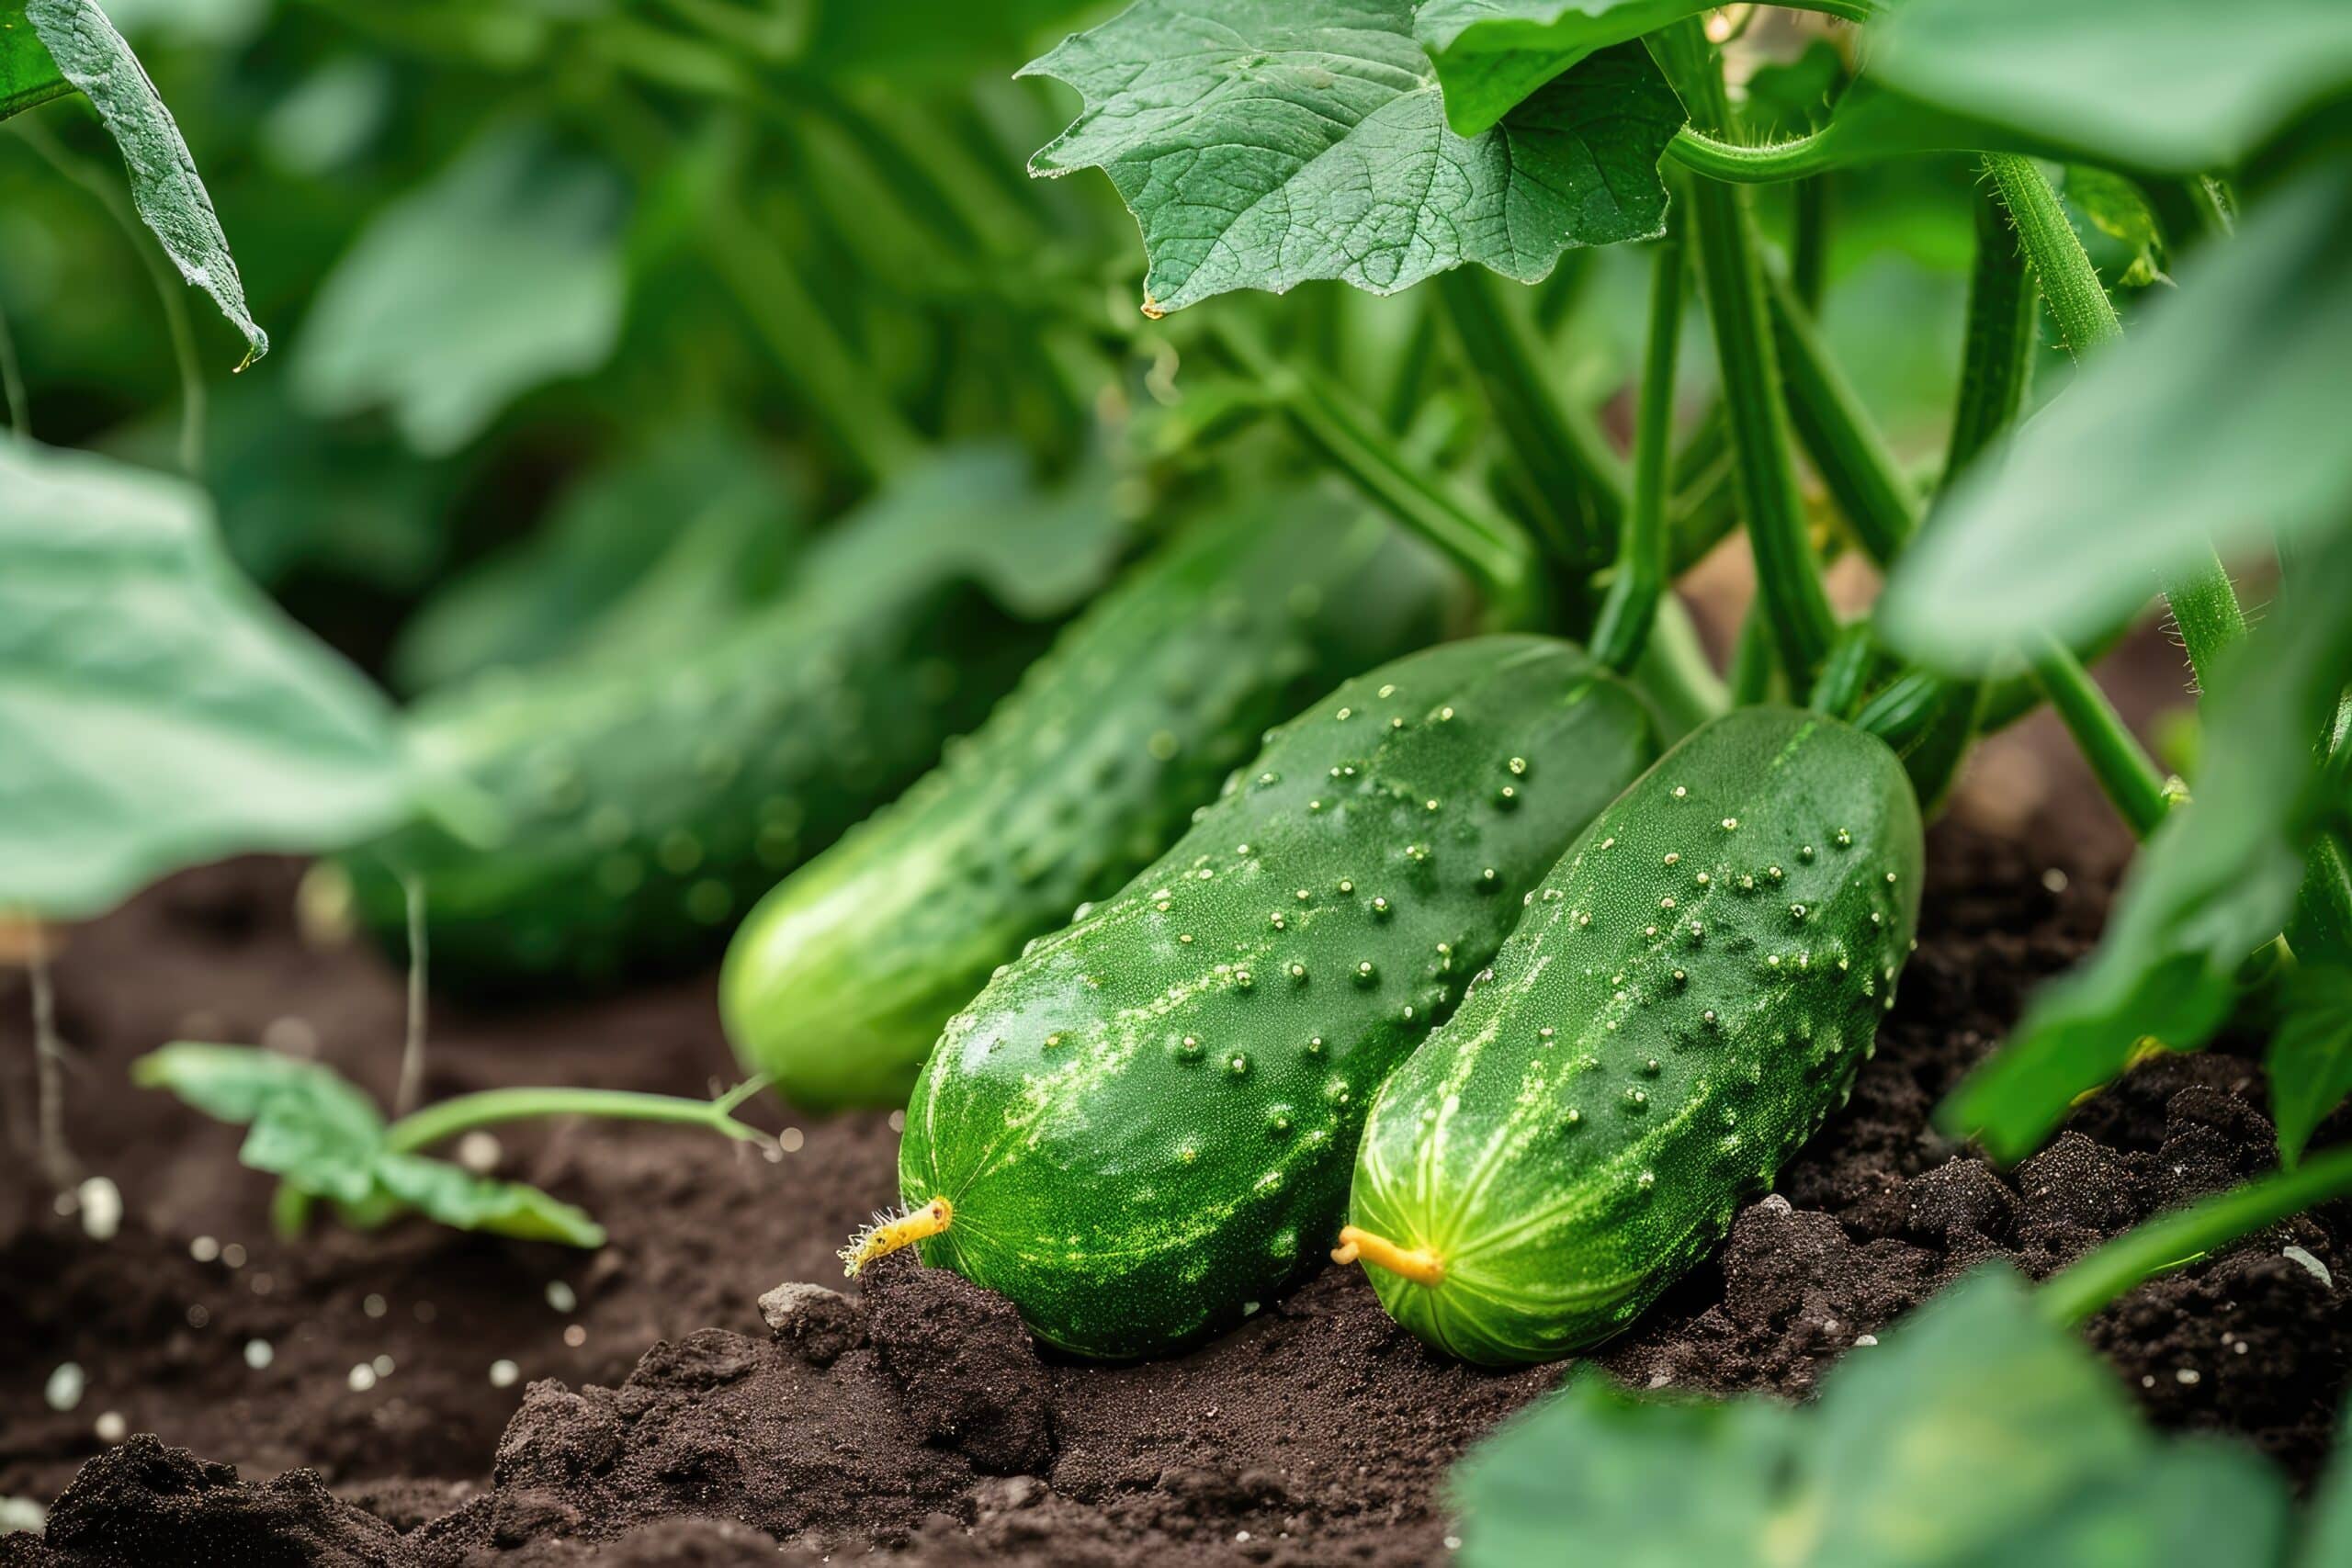 growmyownhealthfood.com : What grows well next to cucumbers?